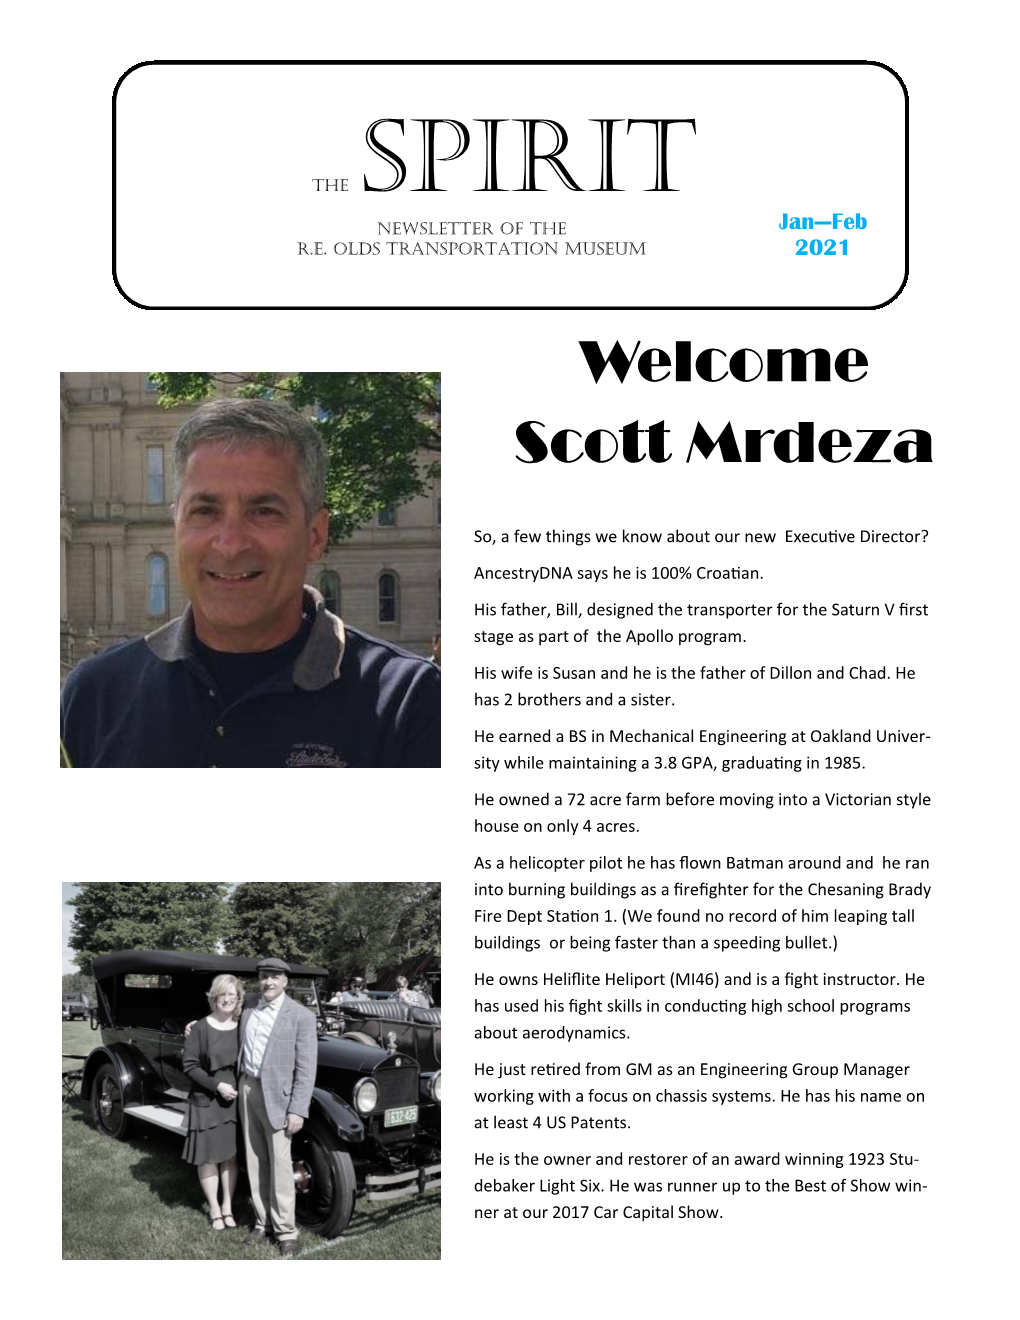 Welcome Scott Mrdeza